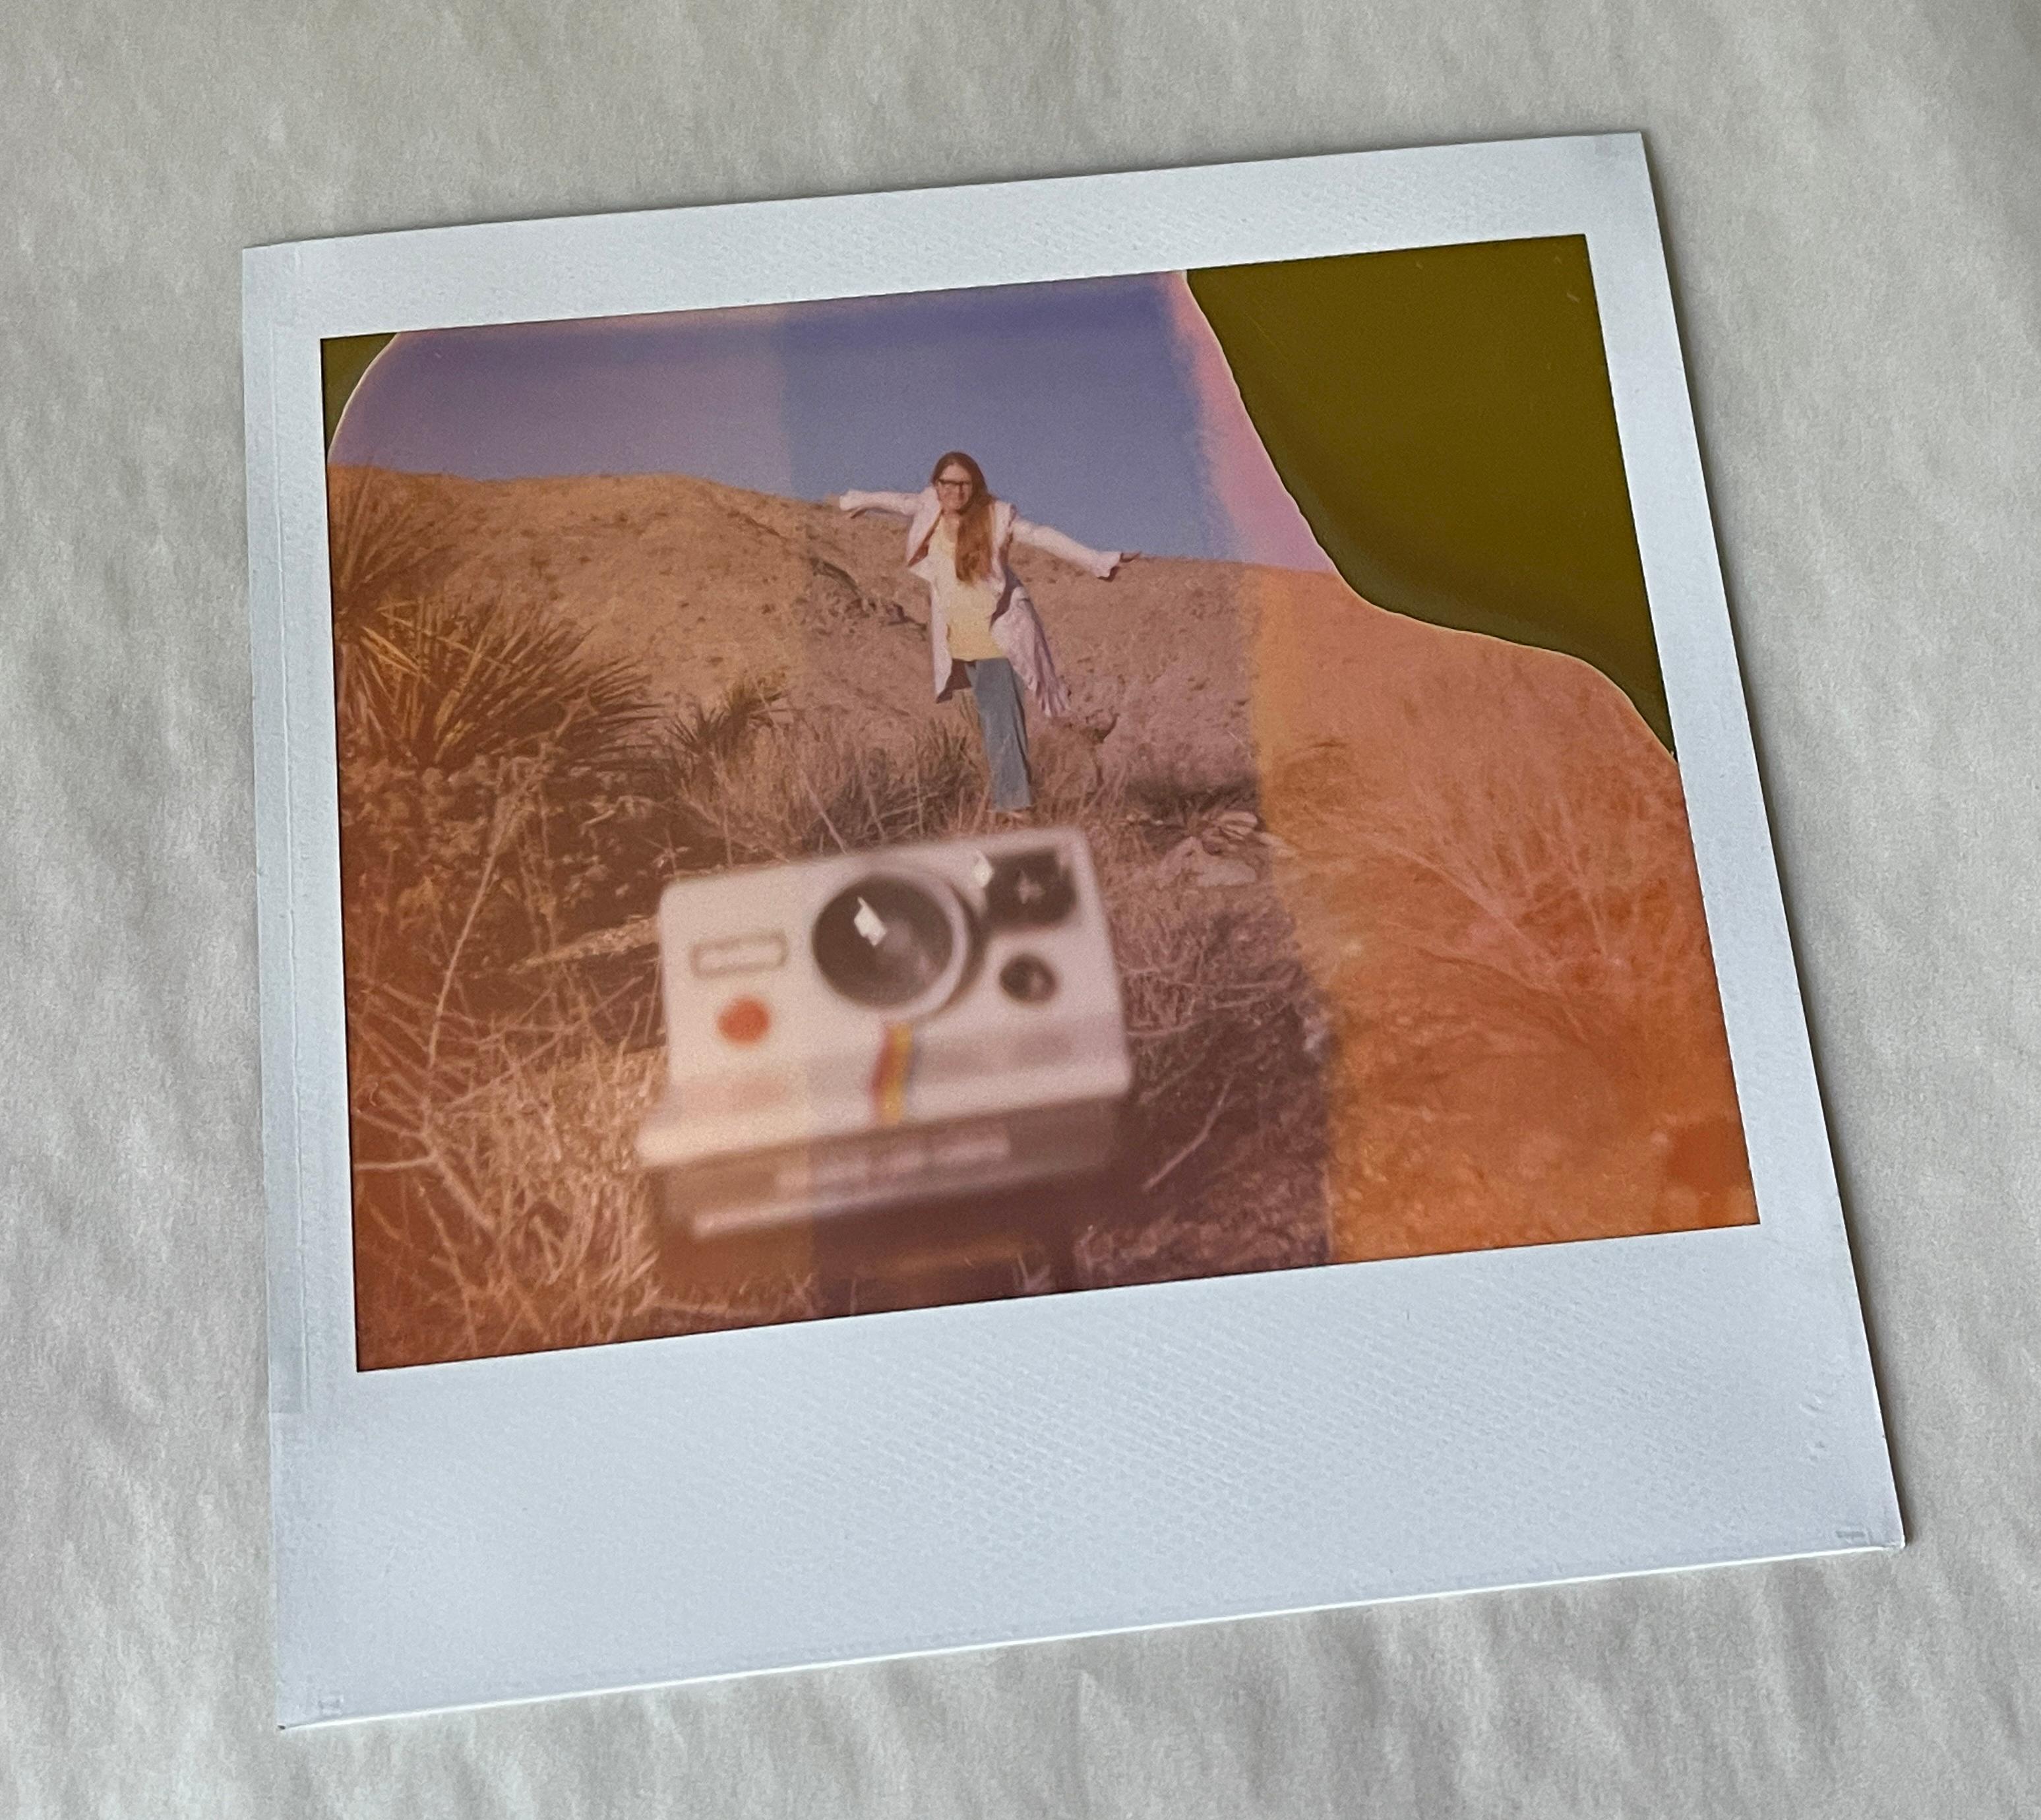 Stefanie Schneider Color Photograph - Self Portrait on Polaroid Camera - Happy New Year 2013 - Unique Piece